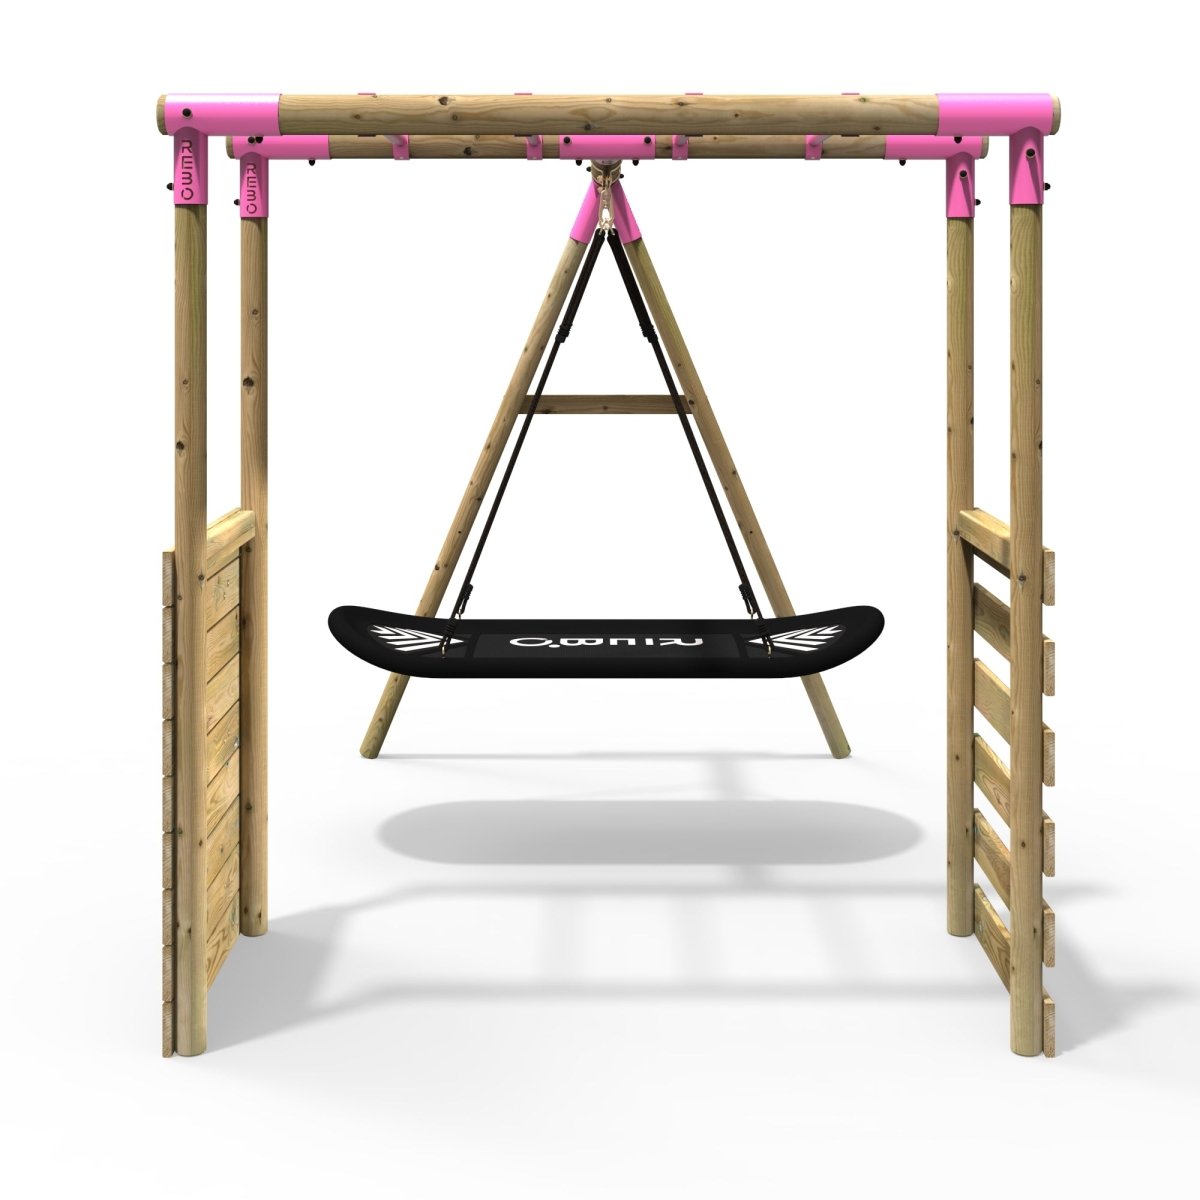 Rebo Wooden Garden Swing Set with Monkey Bars - Boat Pink